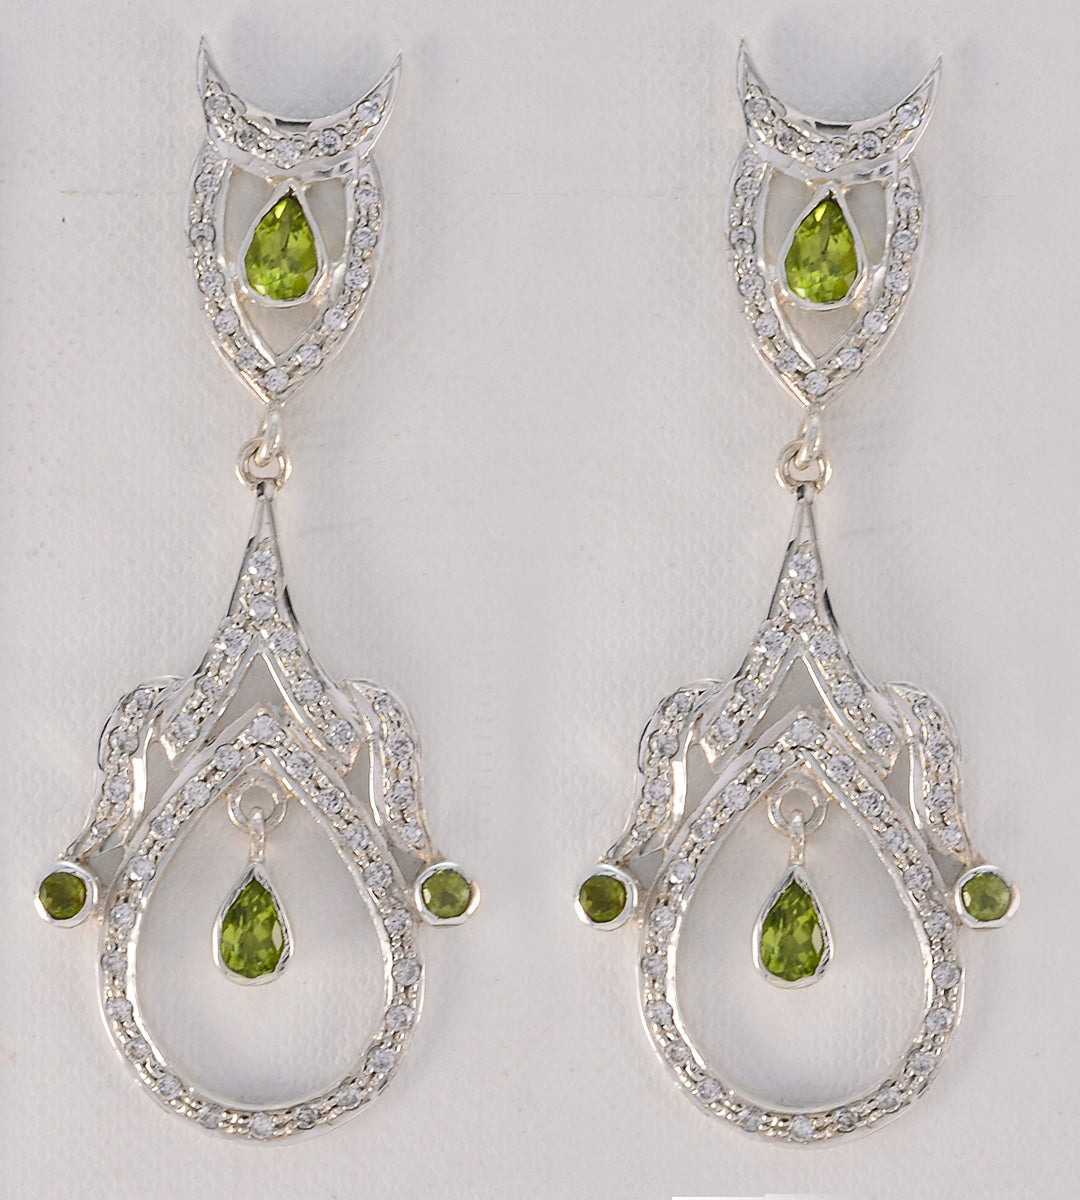 Riyo Good Gemstones multi shape Faceted Green Peridot Silver Earring handmade gift